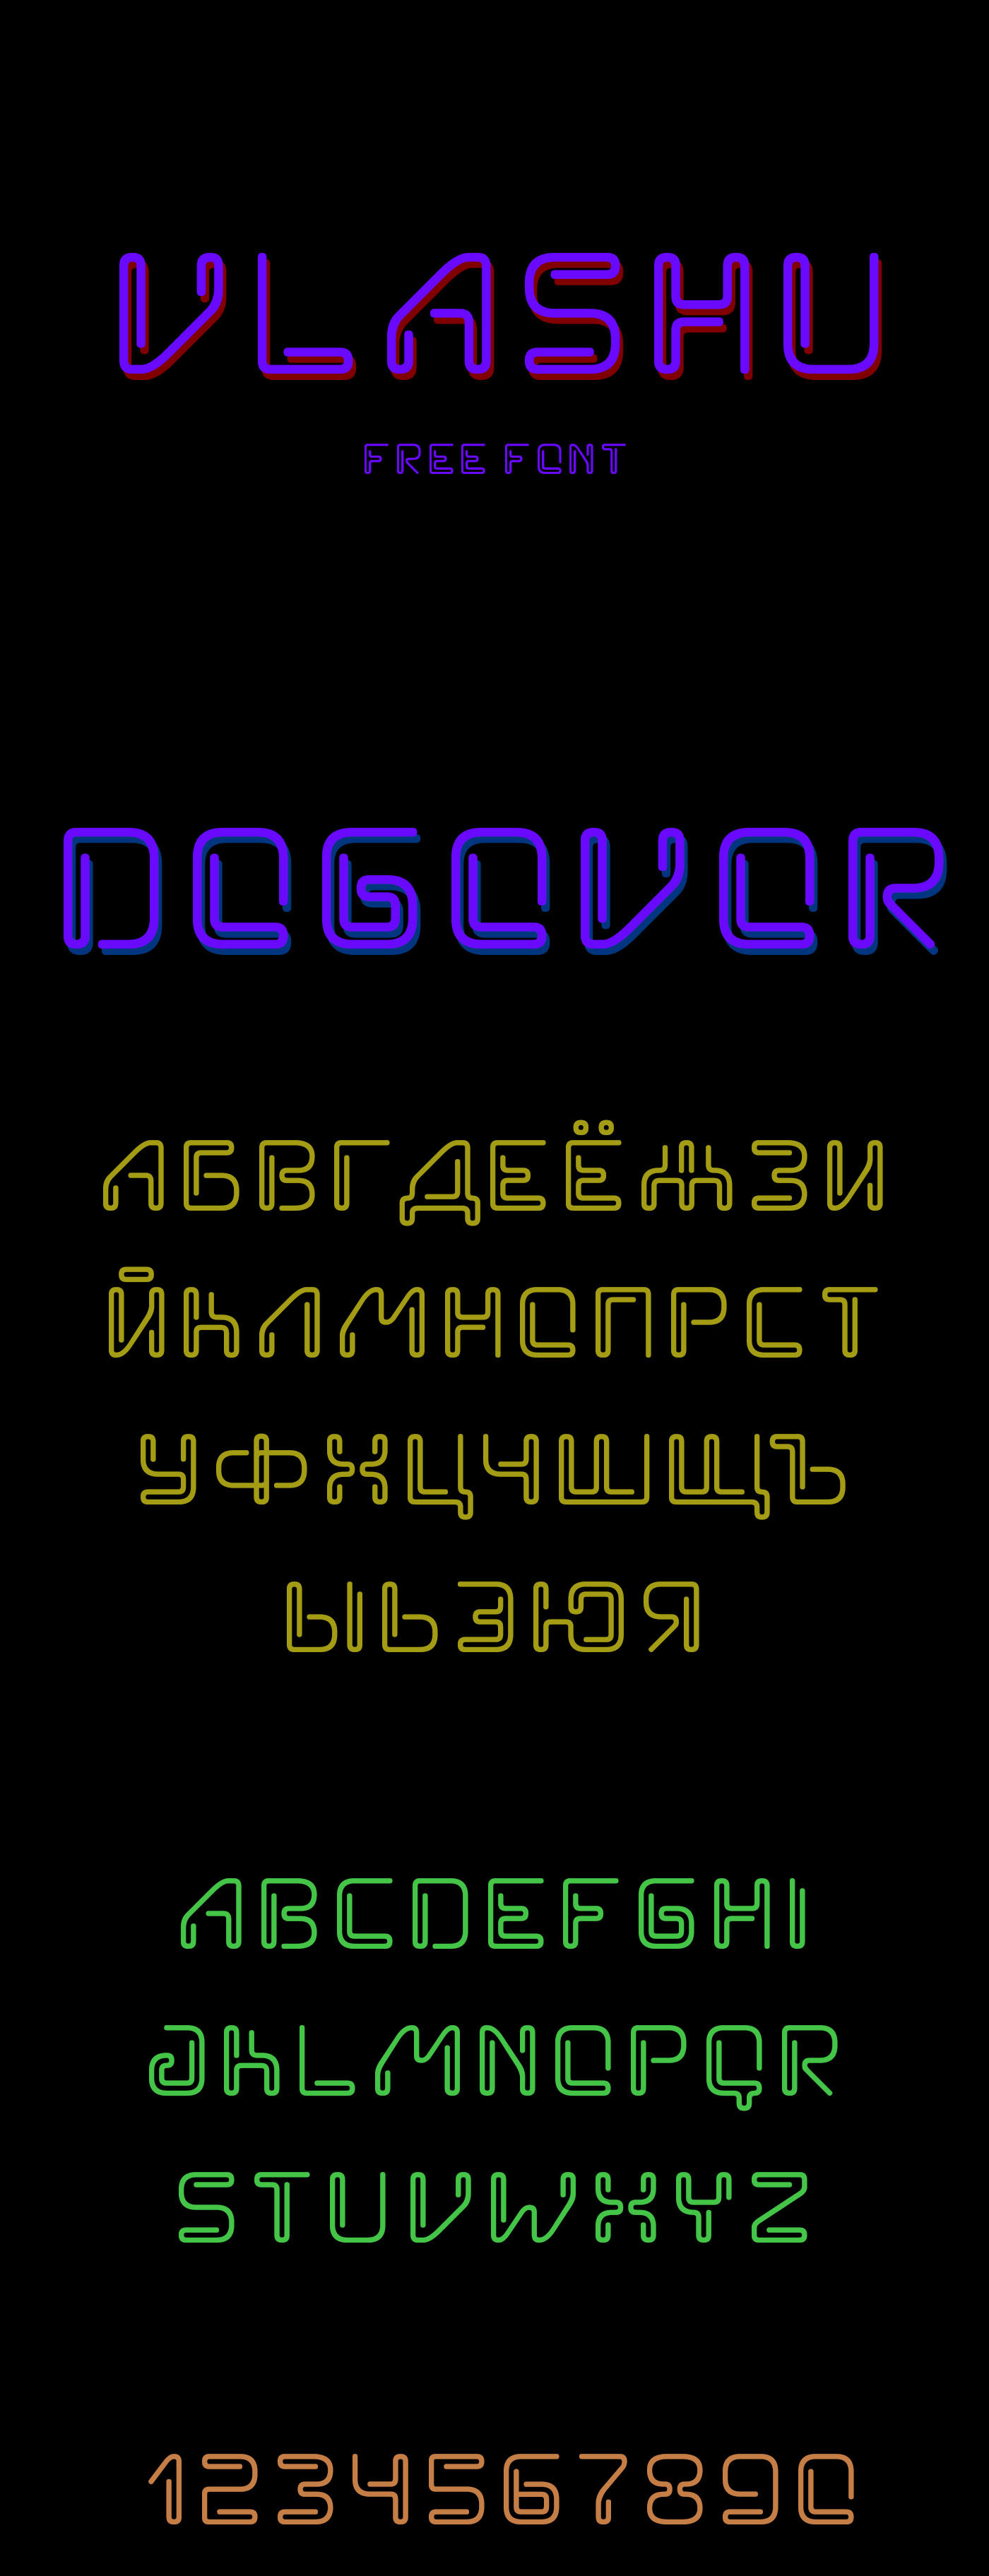 Шрифт — Vlashu (Кириллица, Латиница)